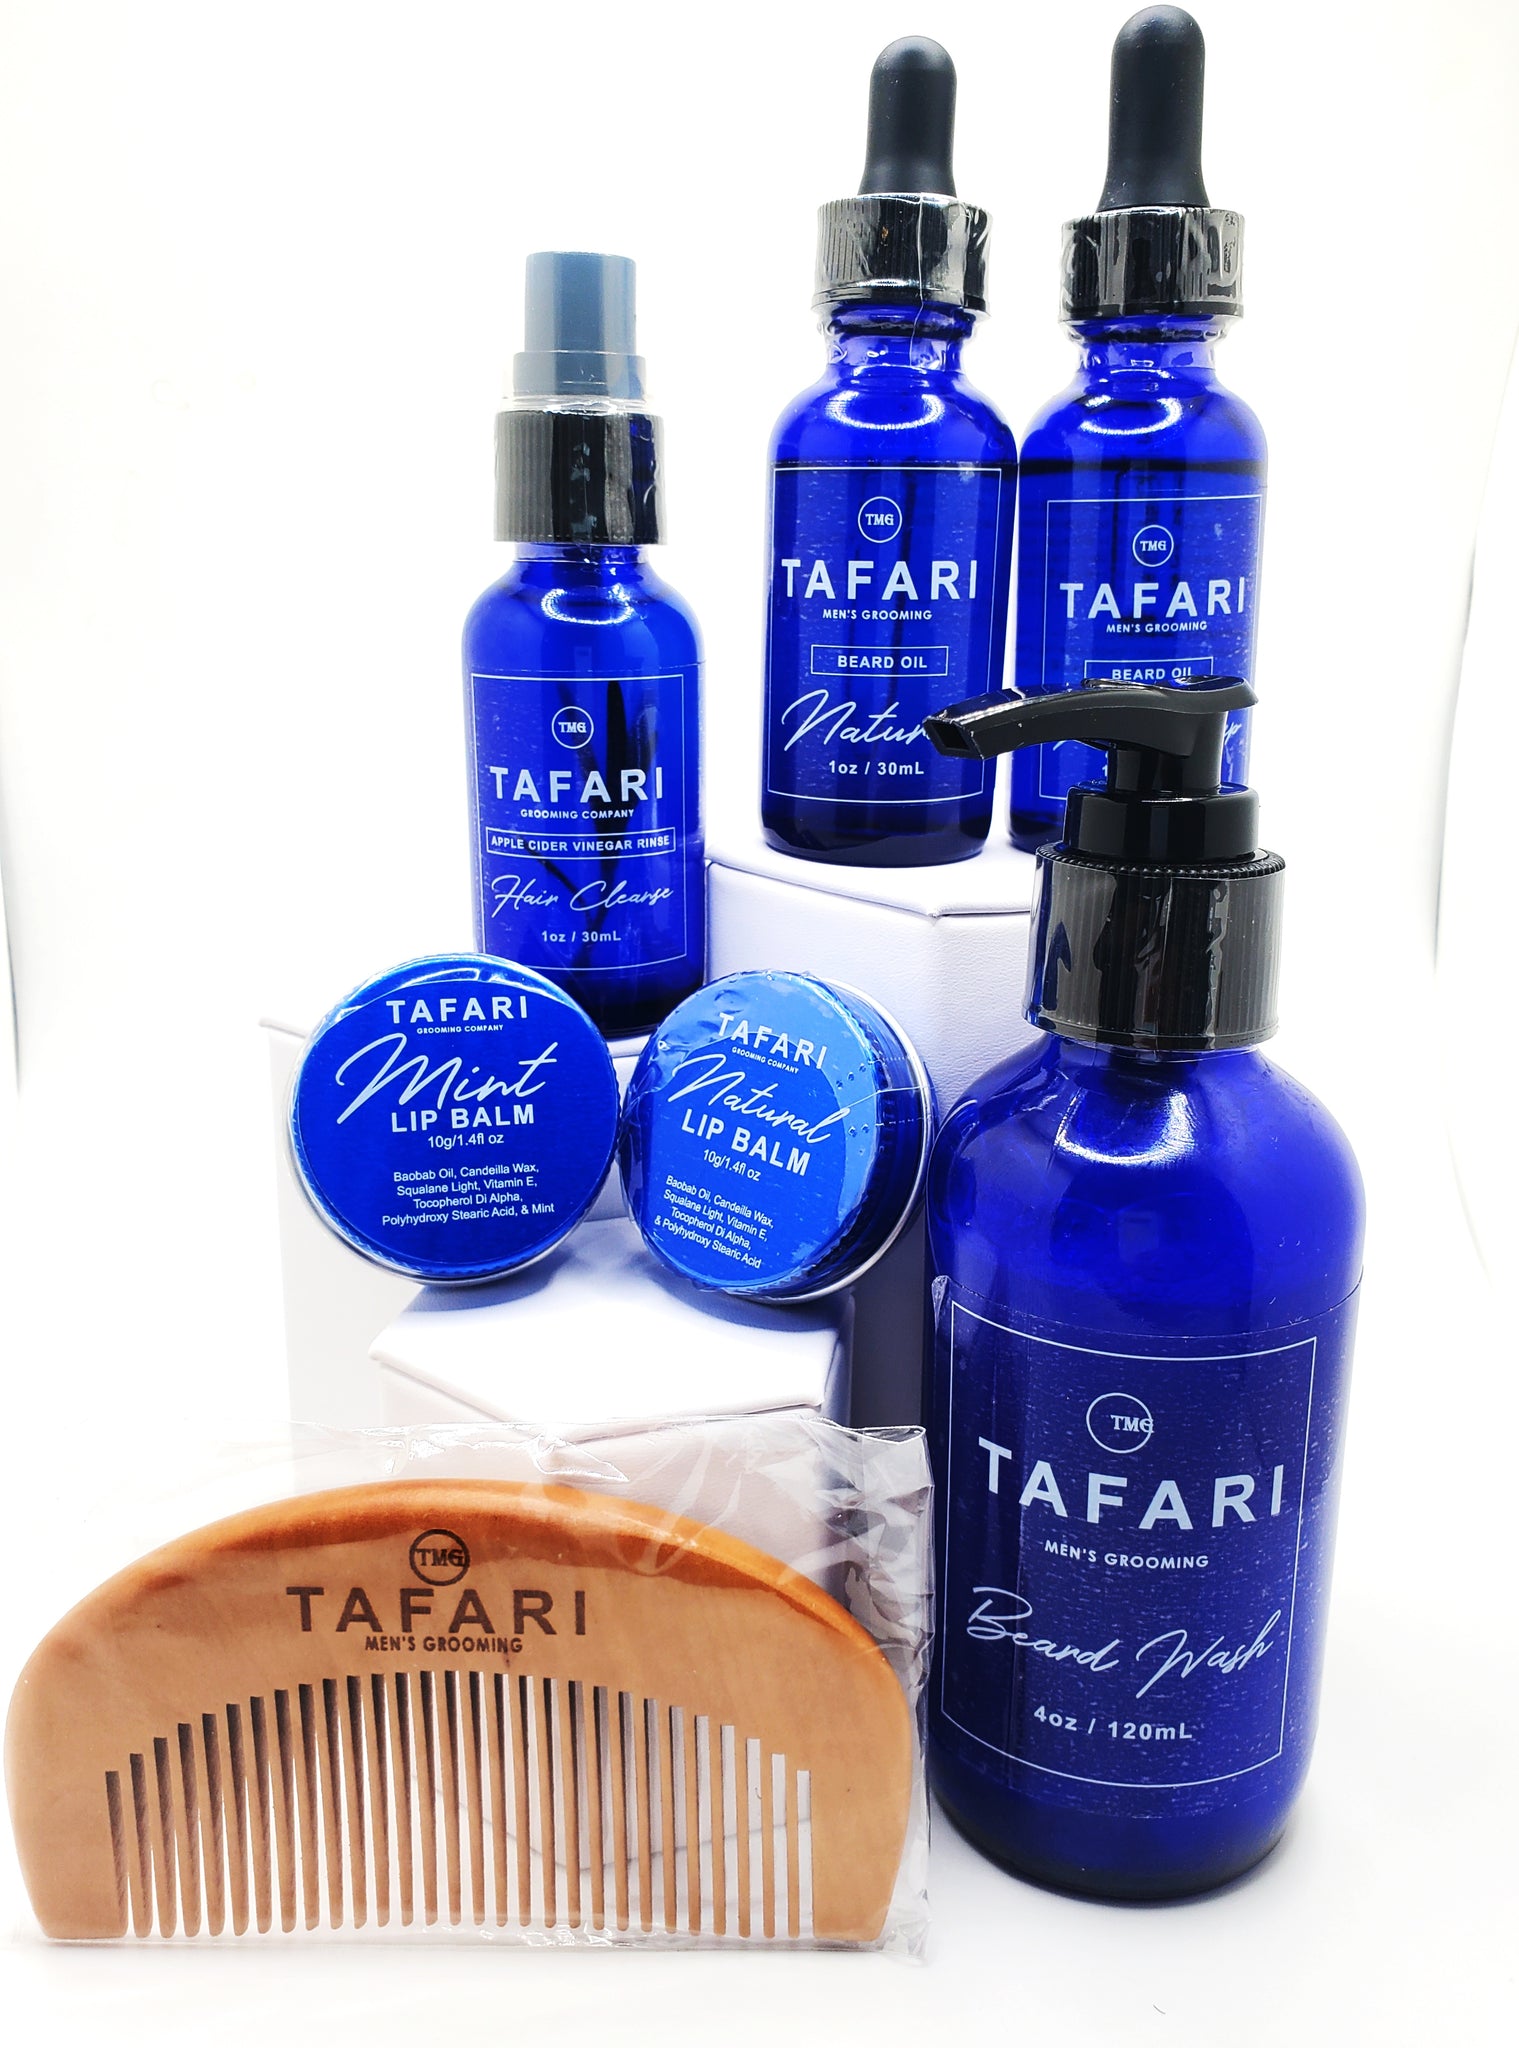 The Tafari Experience